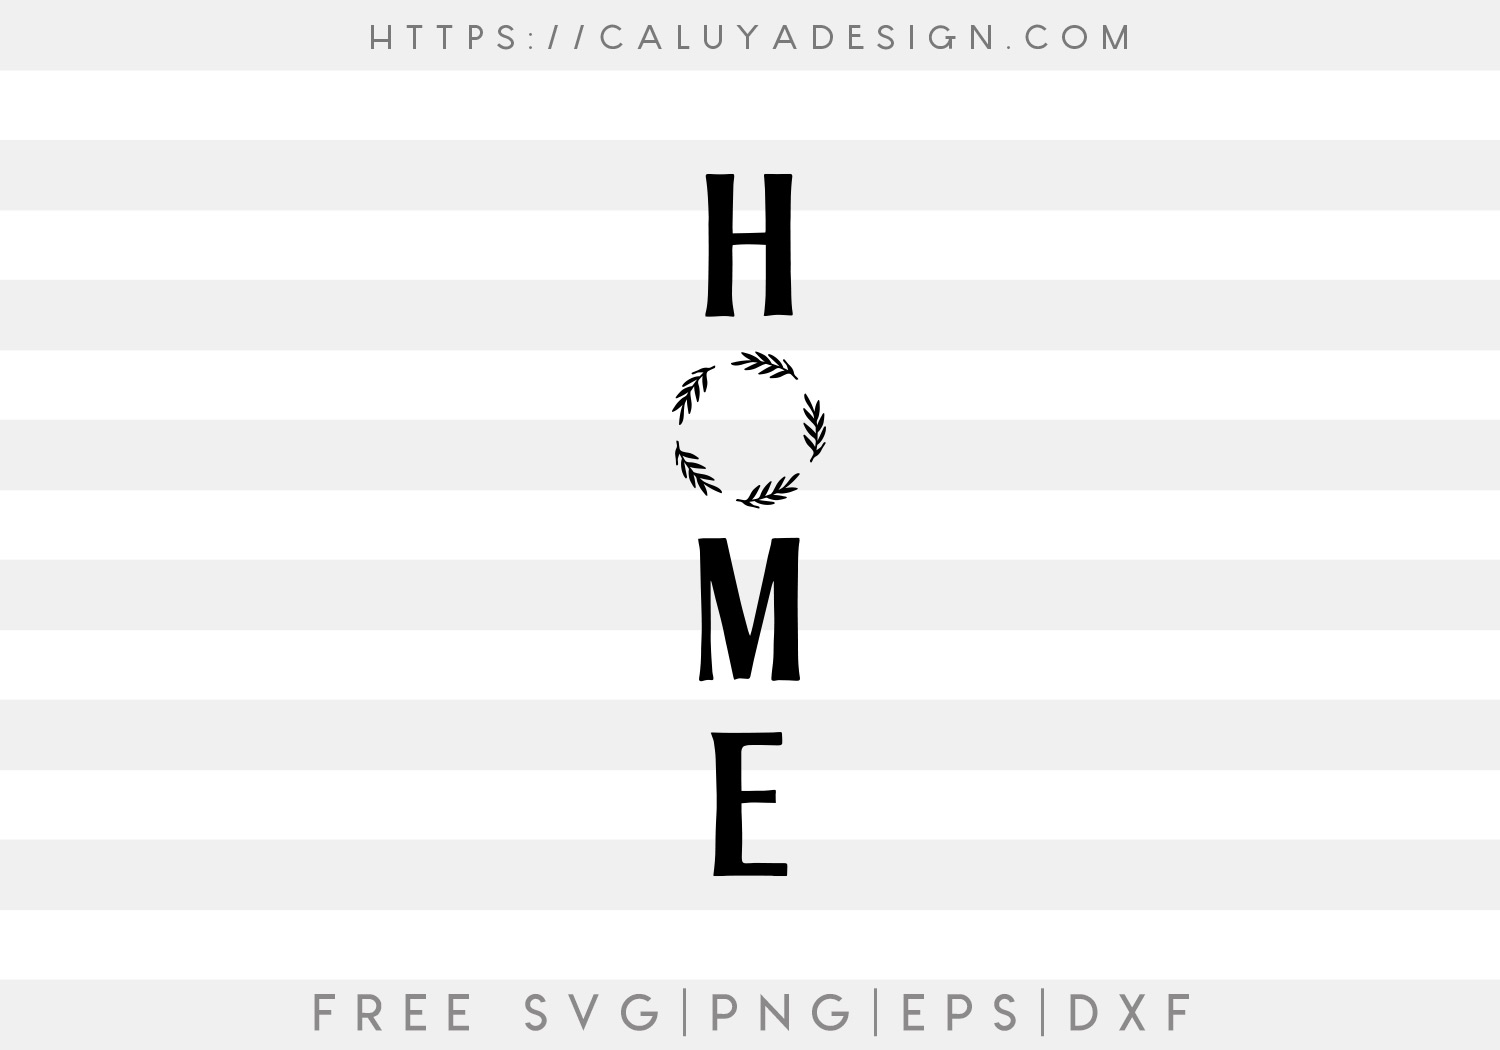 Home Vertical Sign SVG, PNG, EPS & DXF